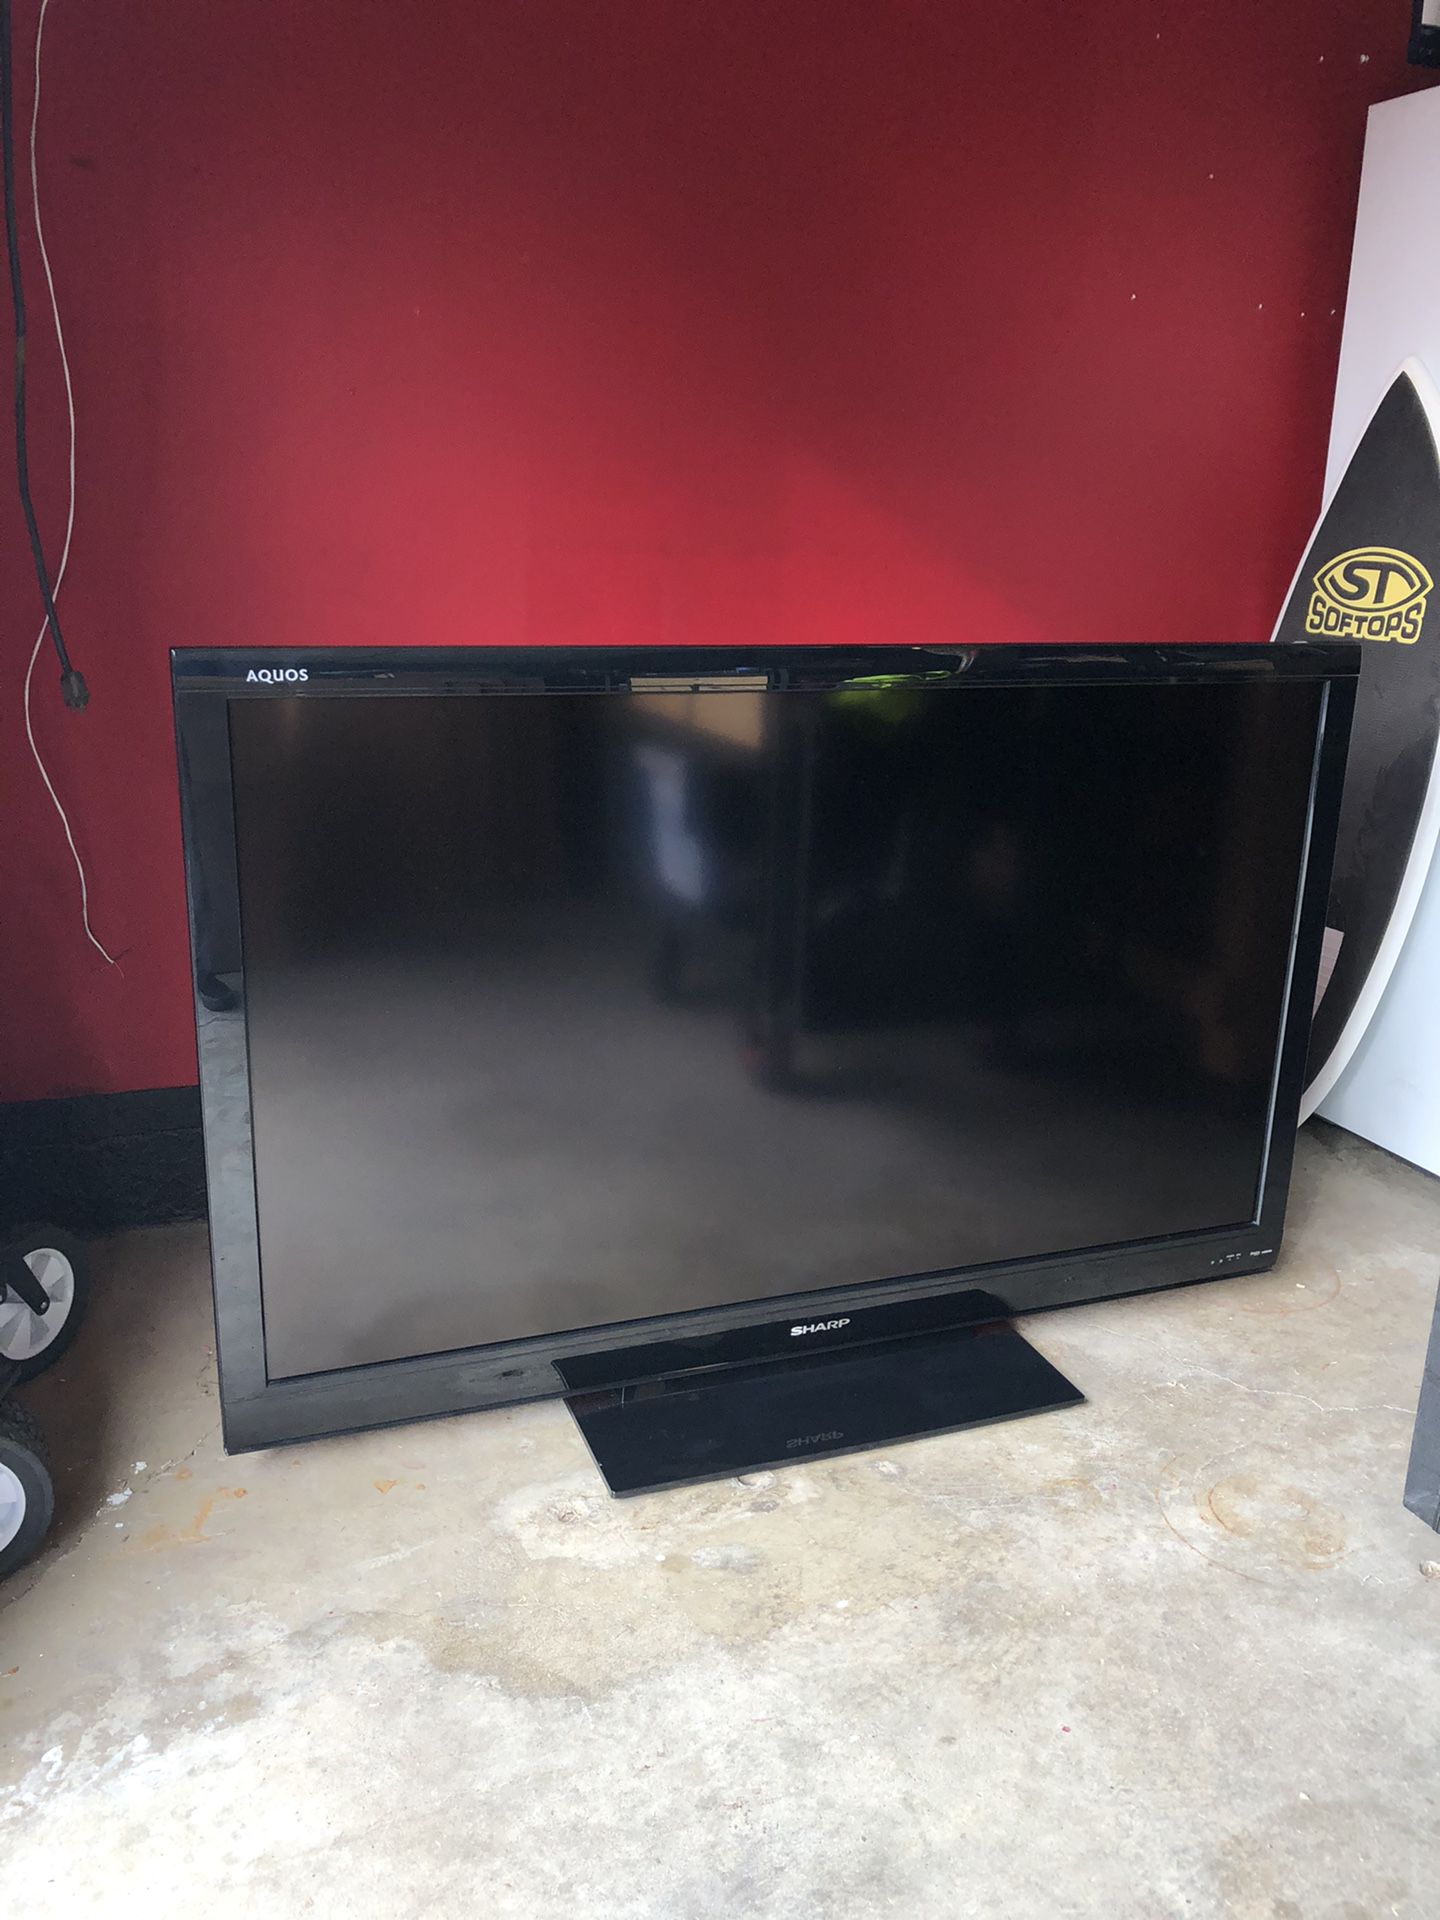 Sharp Aquos 60” LCD TV like new